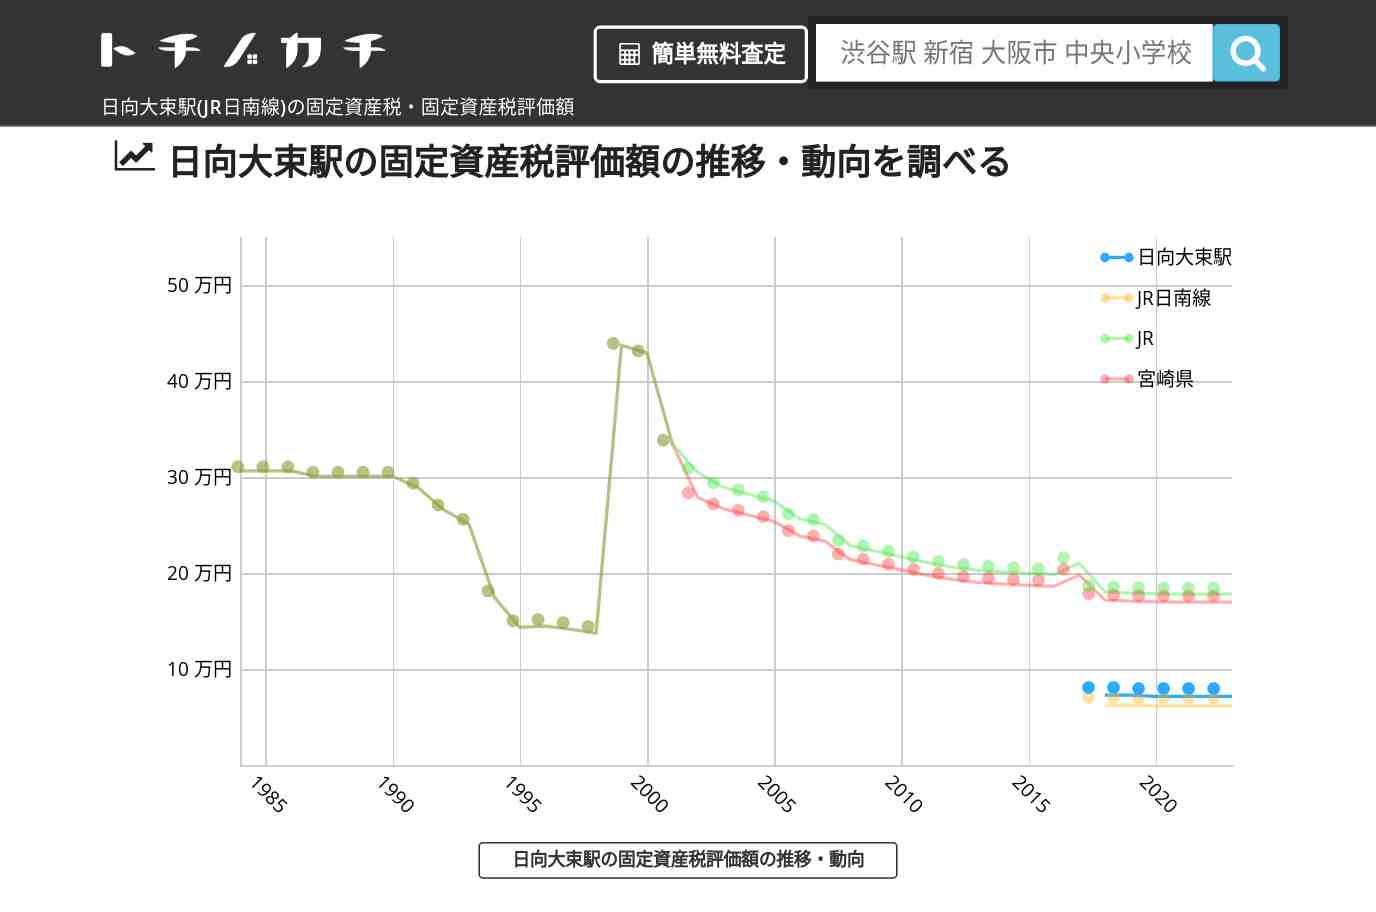 日向大束駅(JR日南線)の固定資産税・固定資産税評価額 | トチノカチ